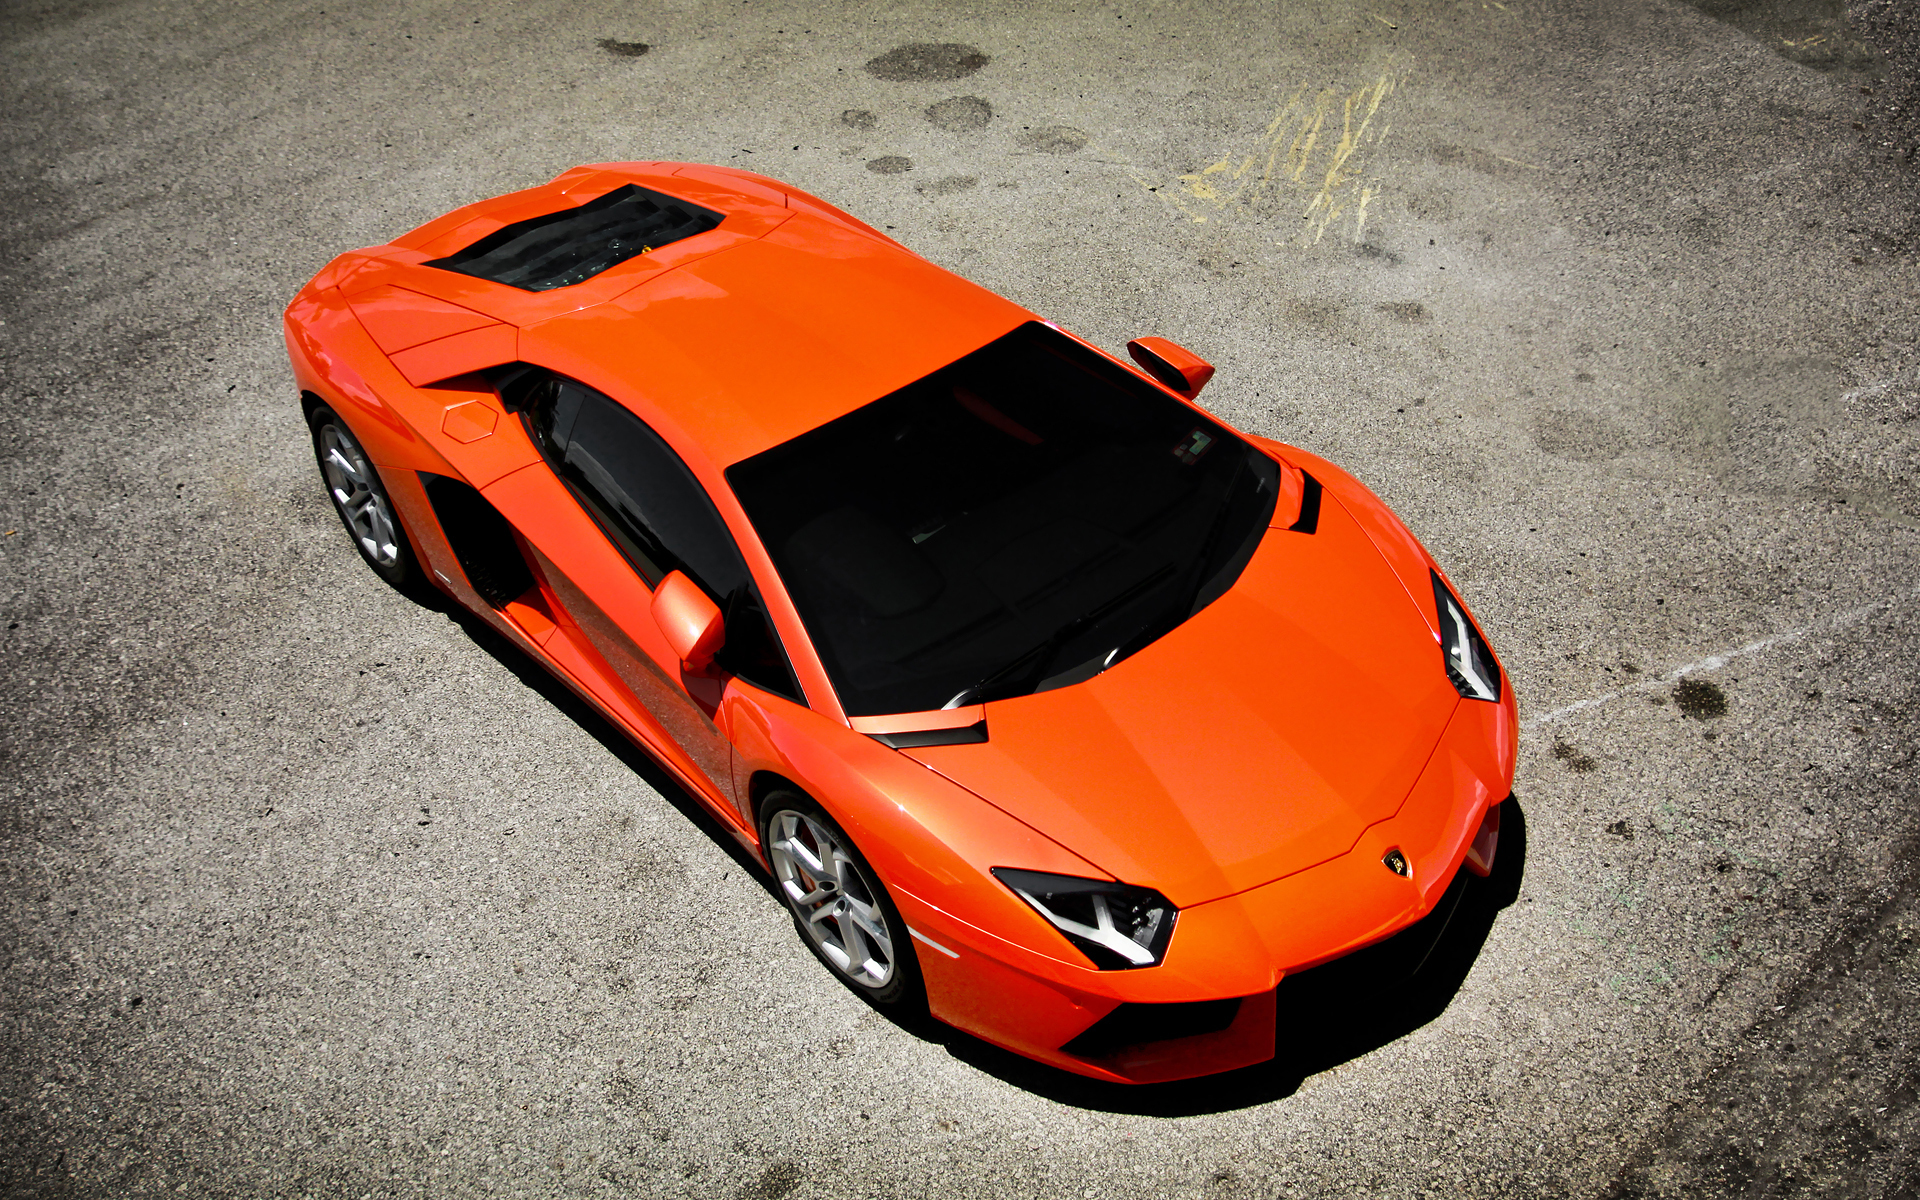 Laden Sie das Lamborghini, Lamborghini Aventador Lp700 4, Fahrzeuge-Bild kostenlos auf Ihren PC-Desktop herunter